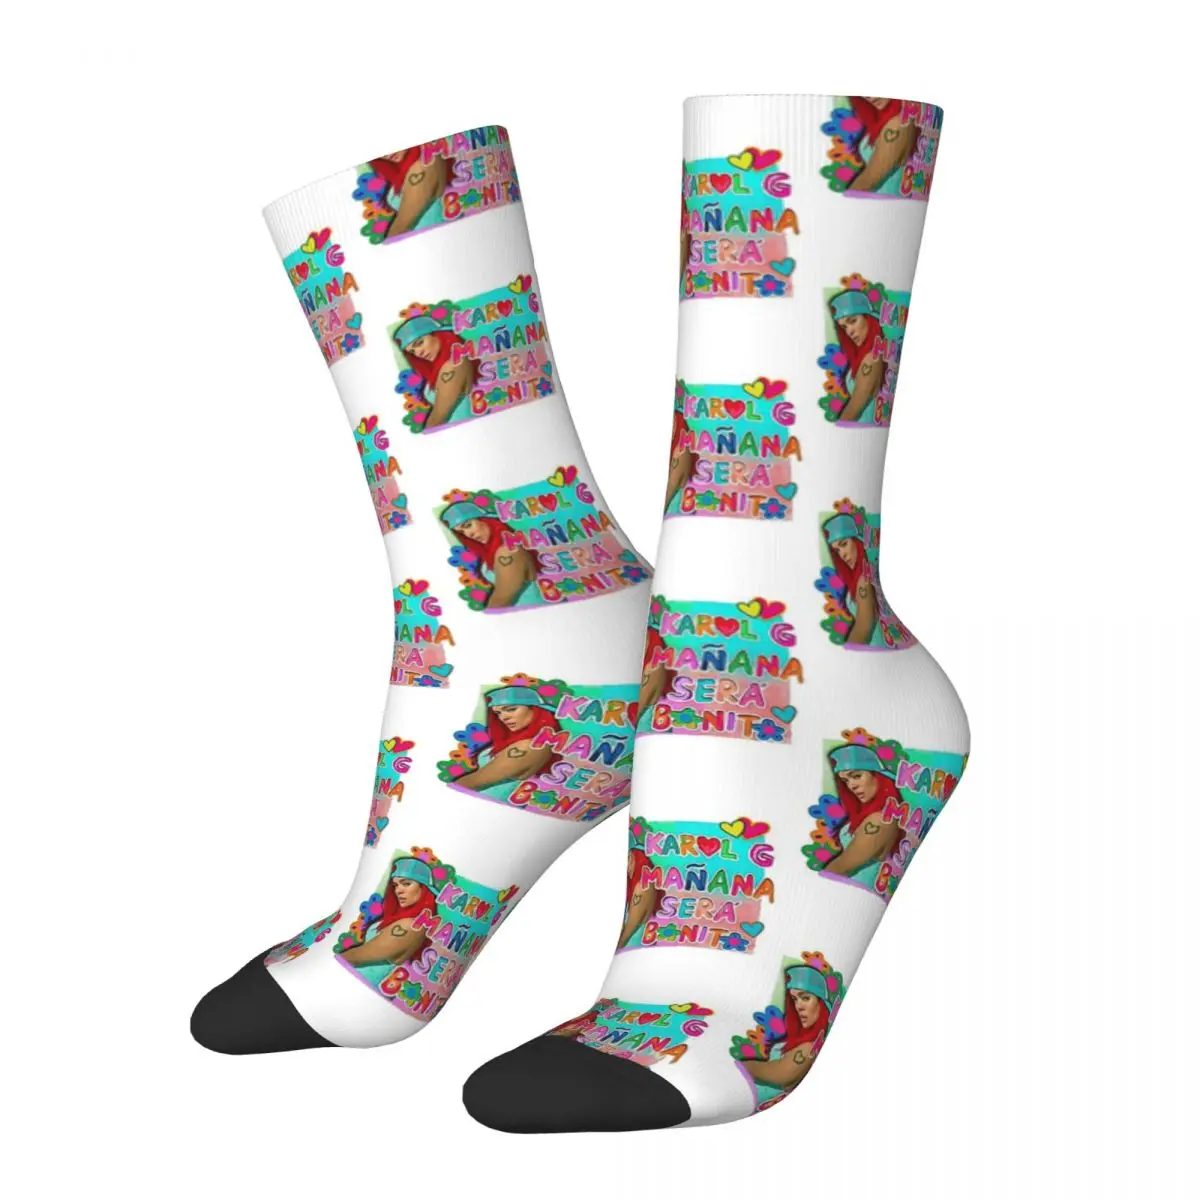 Karol G Flower KAROL G Unisex Winter Socks Hip Hop Happy Socks Street Style Crazy Sock